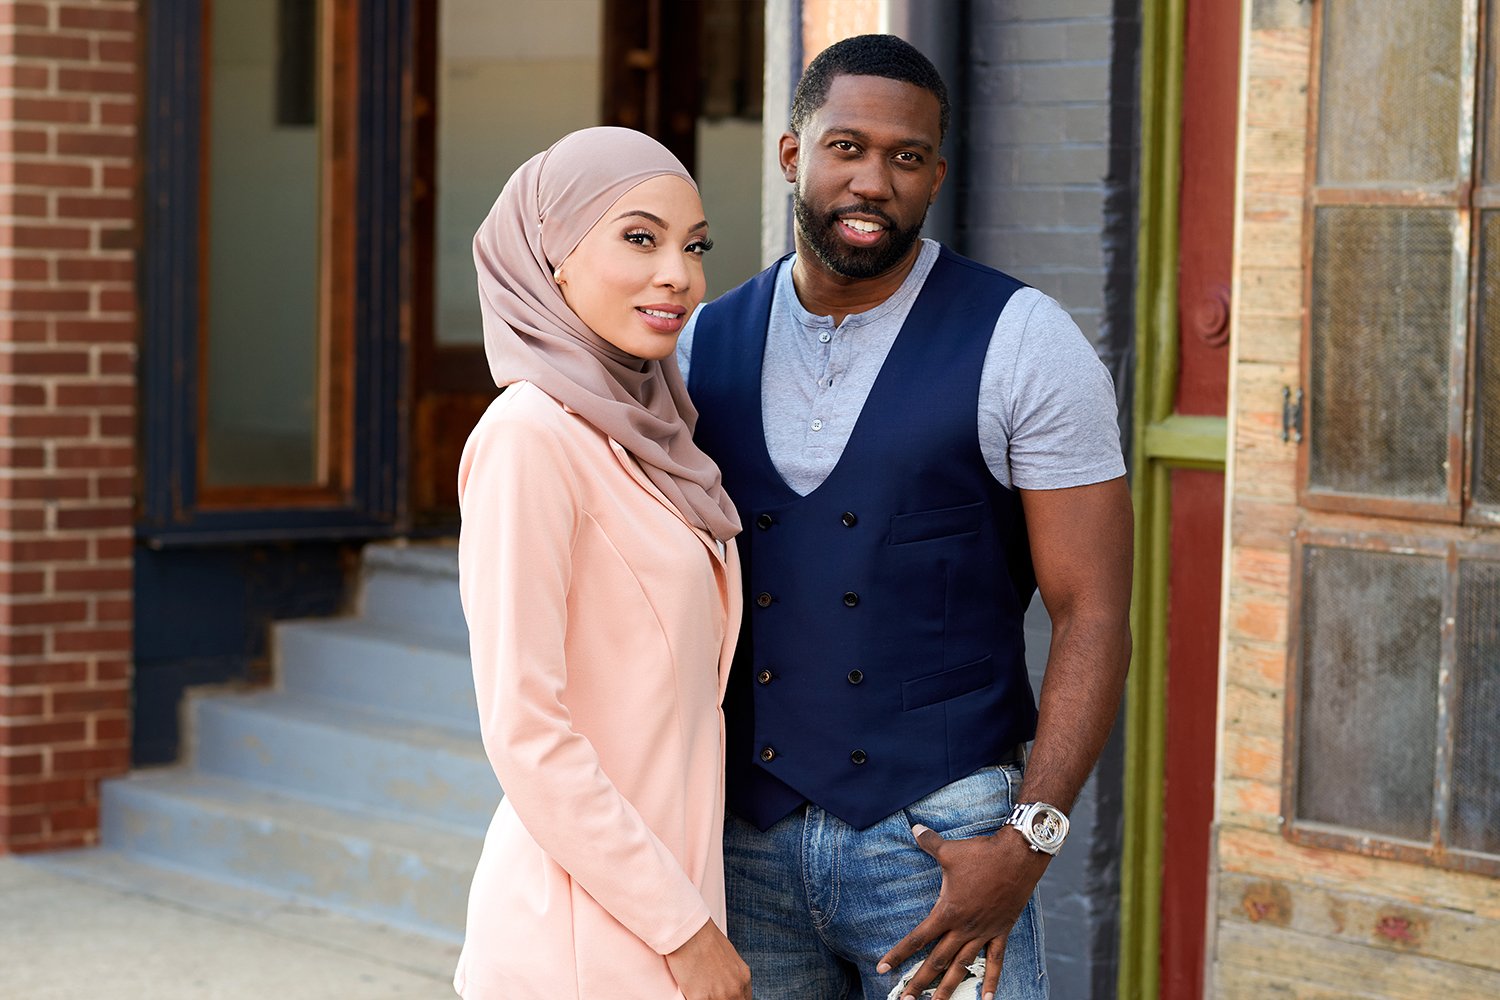 Bilal and Shaeeda pose together in Kansas City, Missouri for 90 Day Fiancé Season 9.